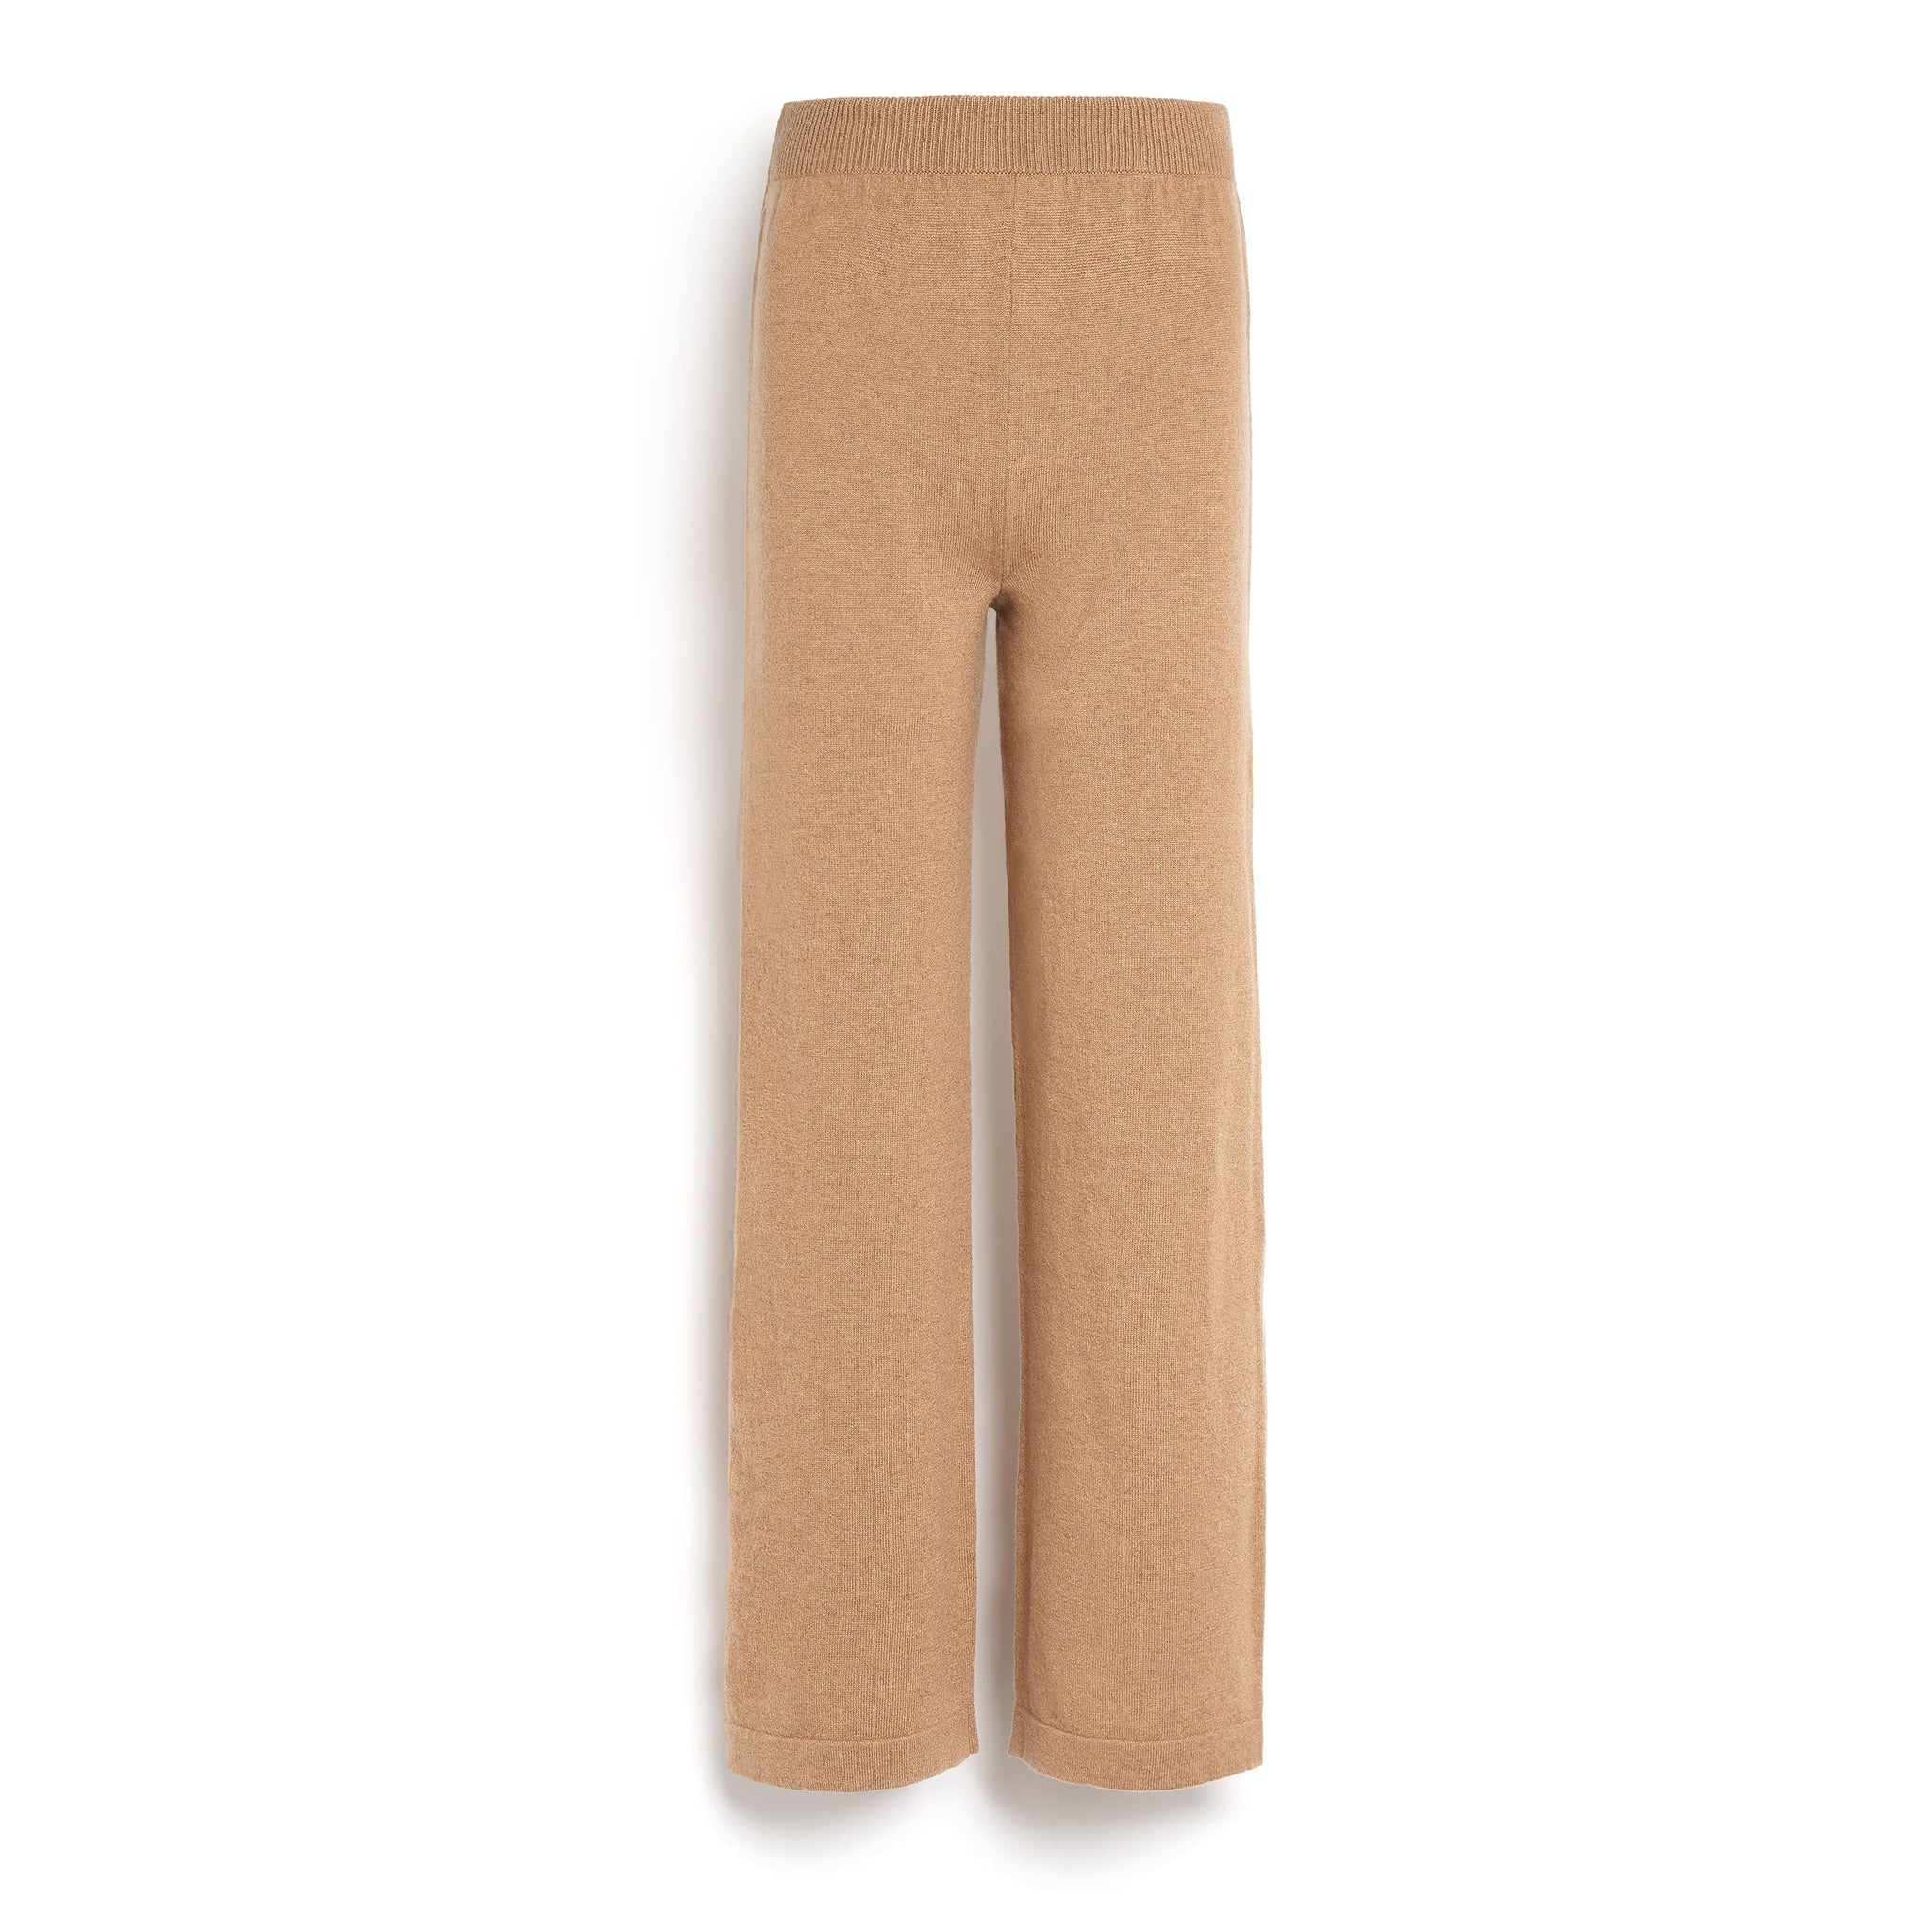 pure cashmere LOOSE FIT PANTS - Trousers - oatmeal/taupe - Zalando.de